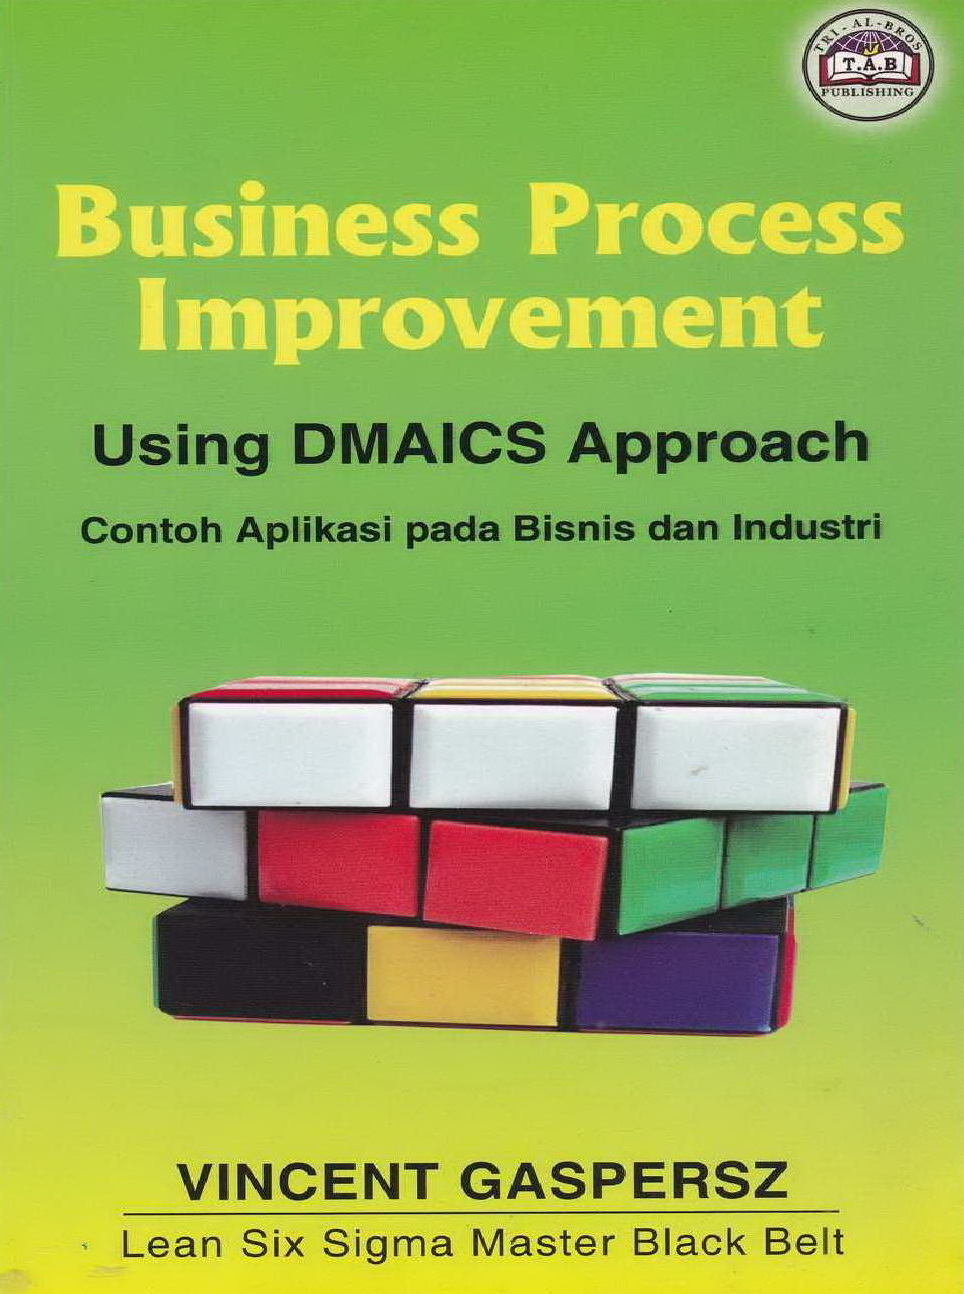 2002 Business Process Improvement Using DMAICS Approach Contoh Aplikasi pada Bisnis dan Industri VG